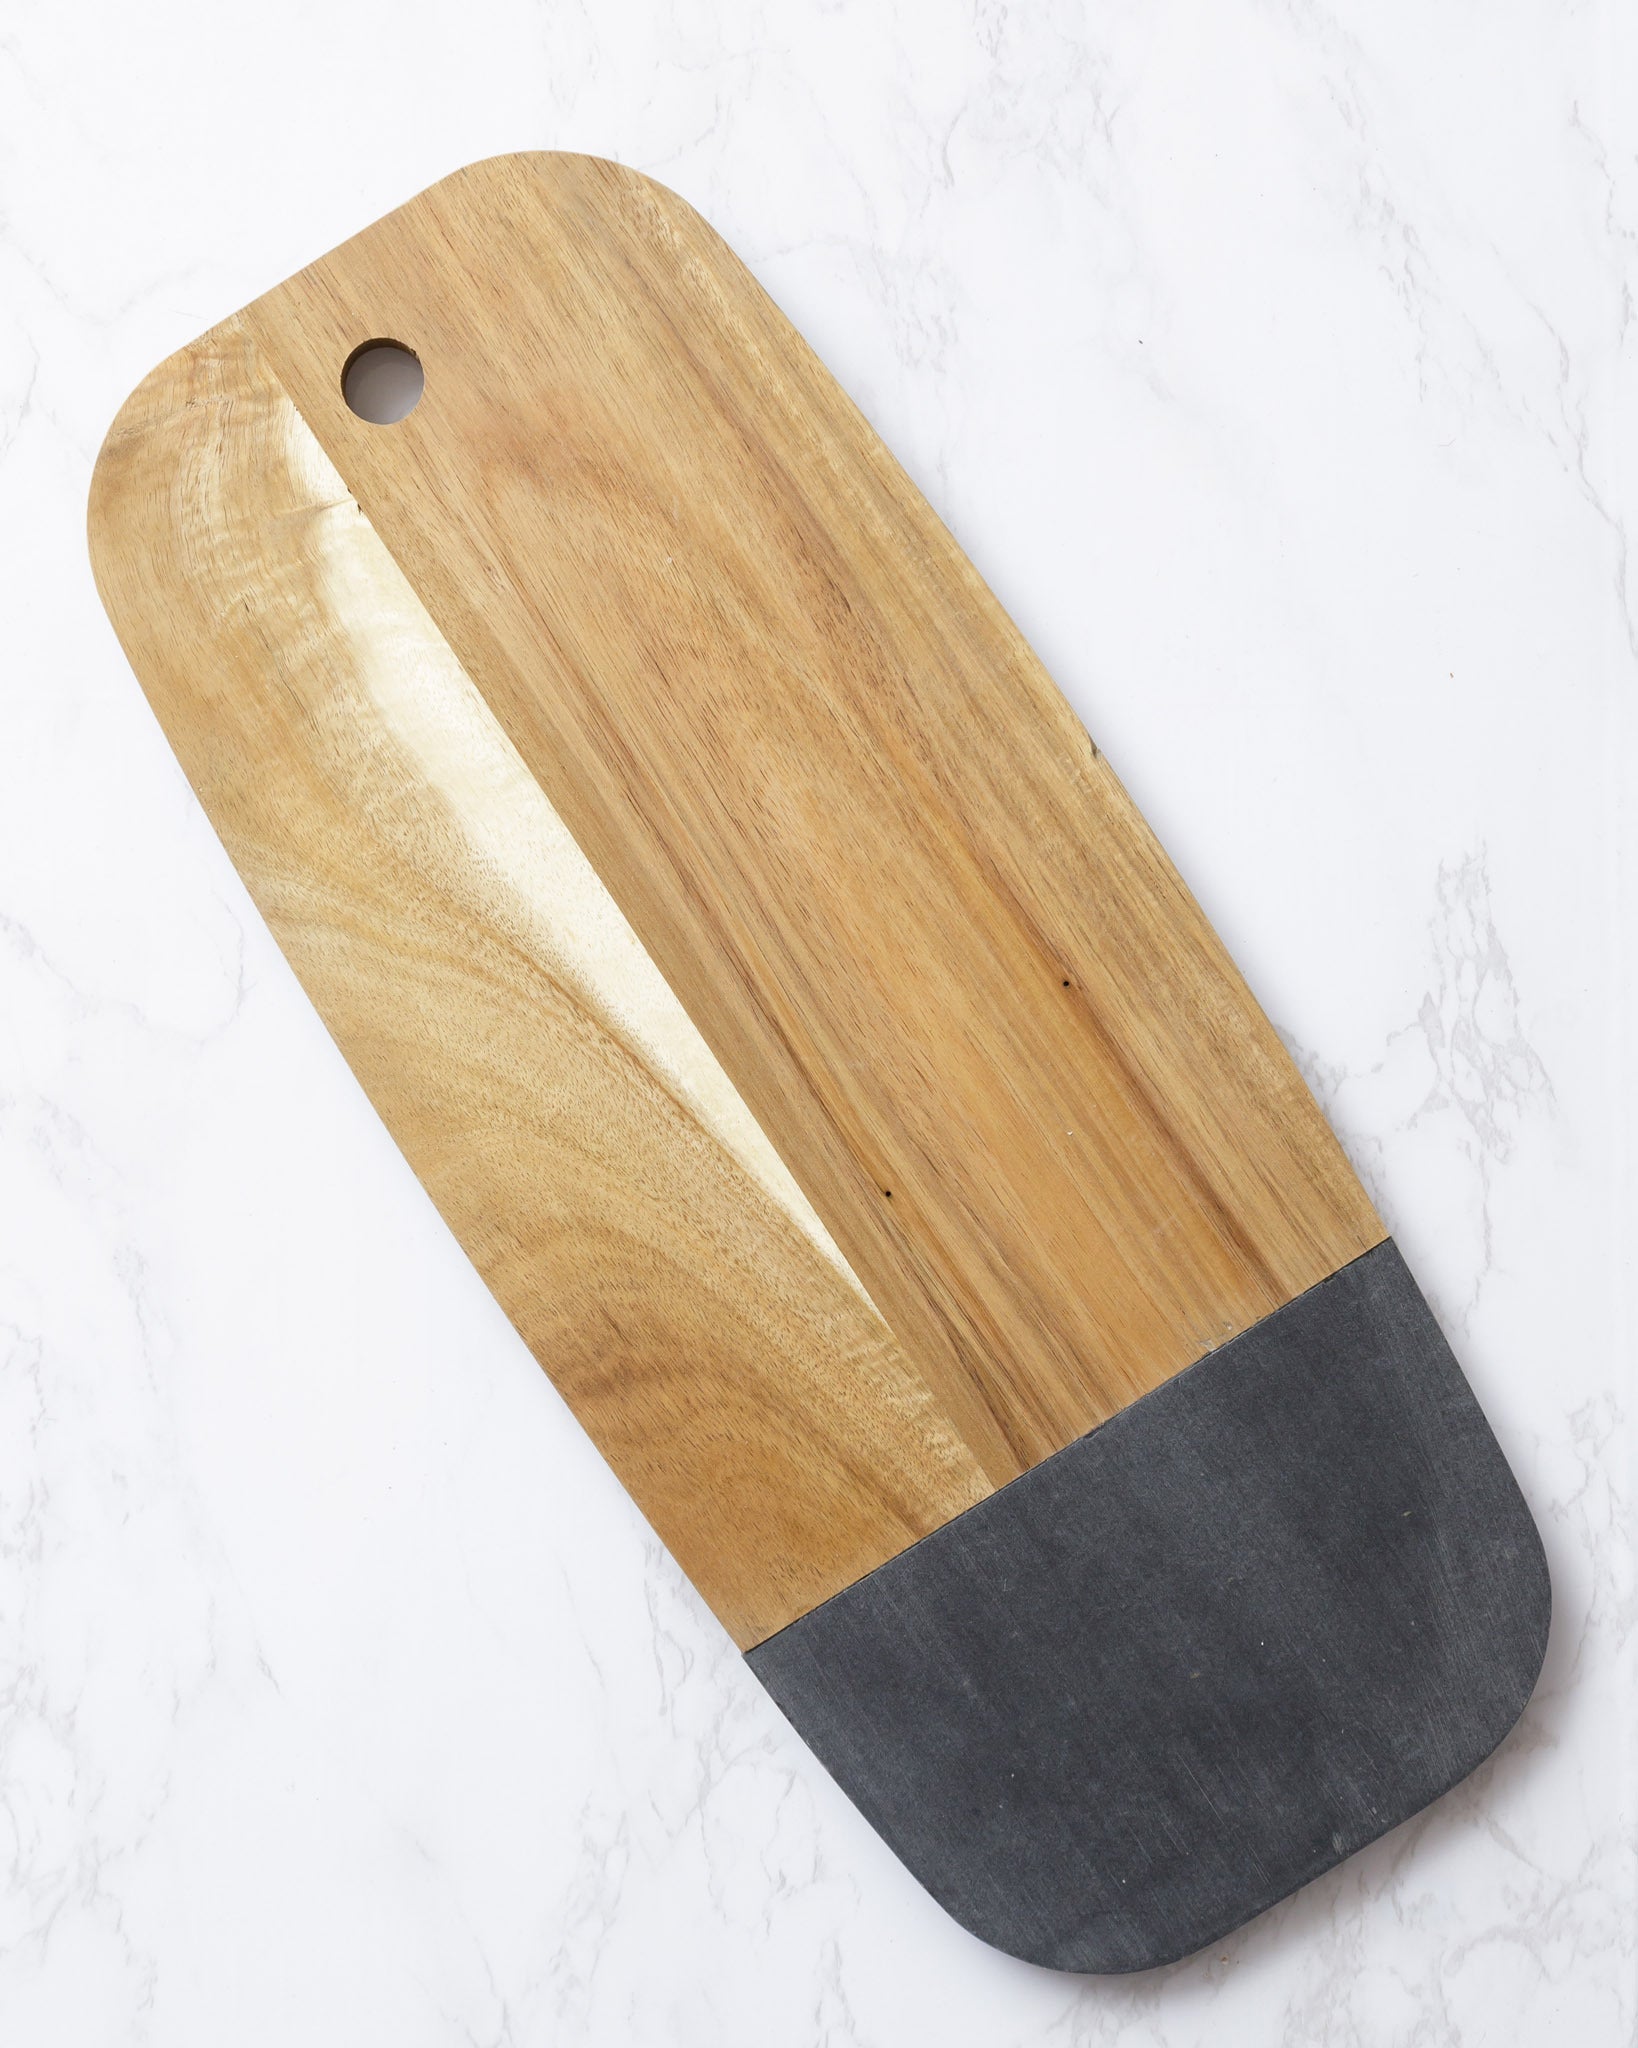 Slate and Wood Cutting Board - Large